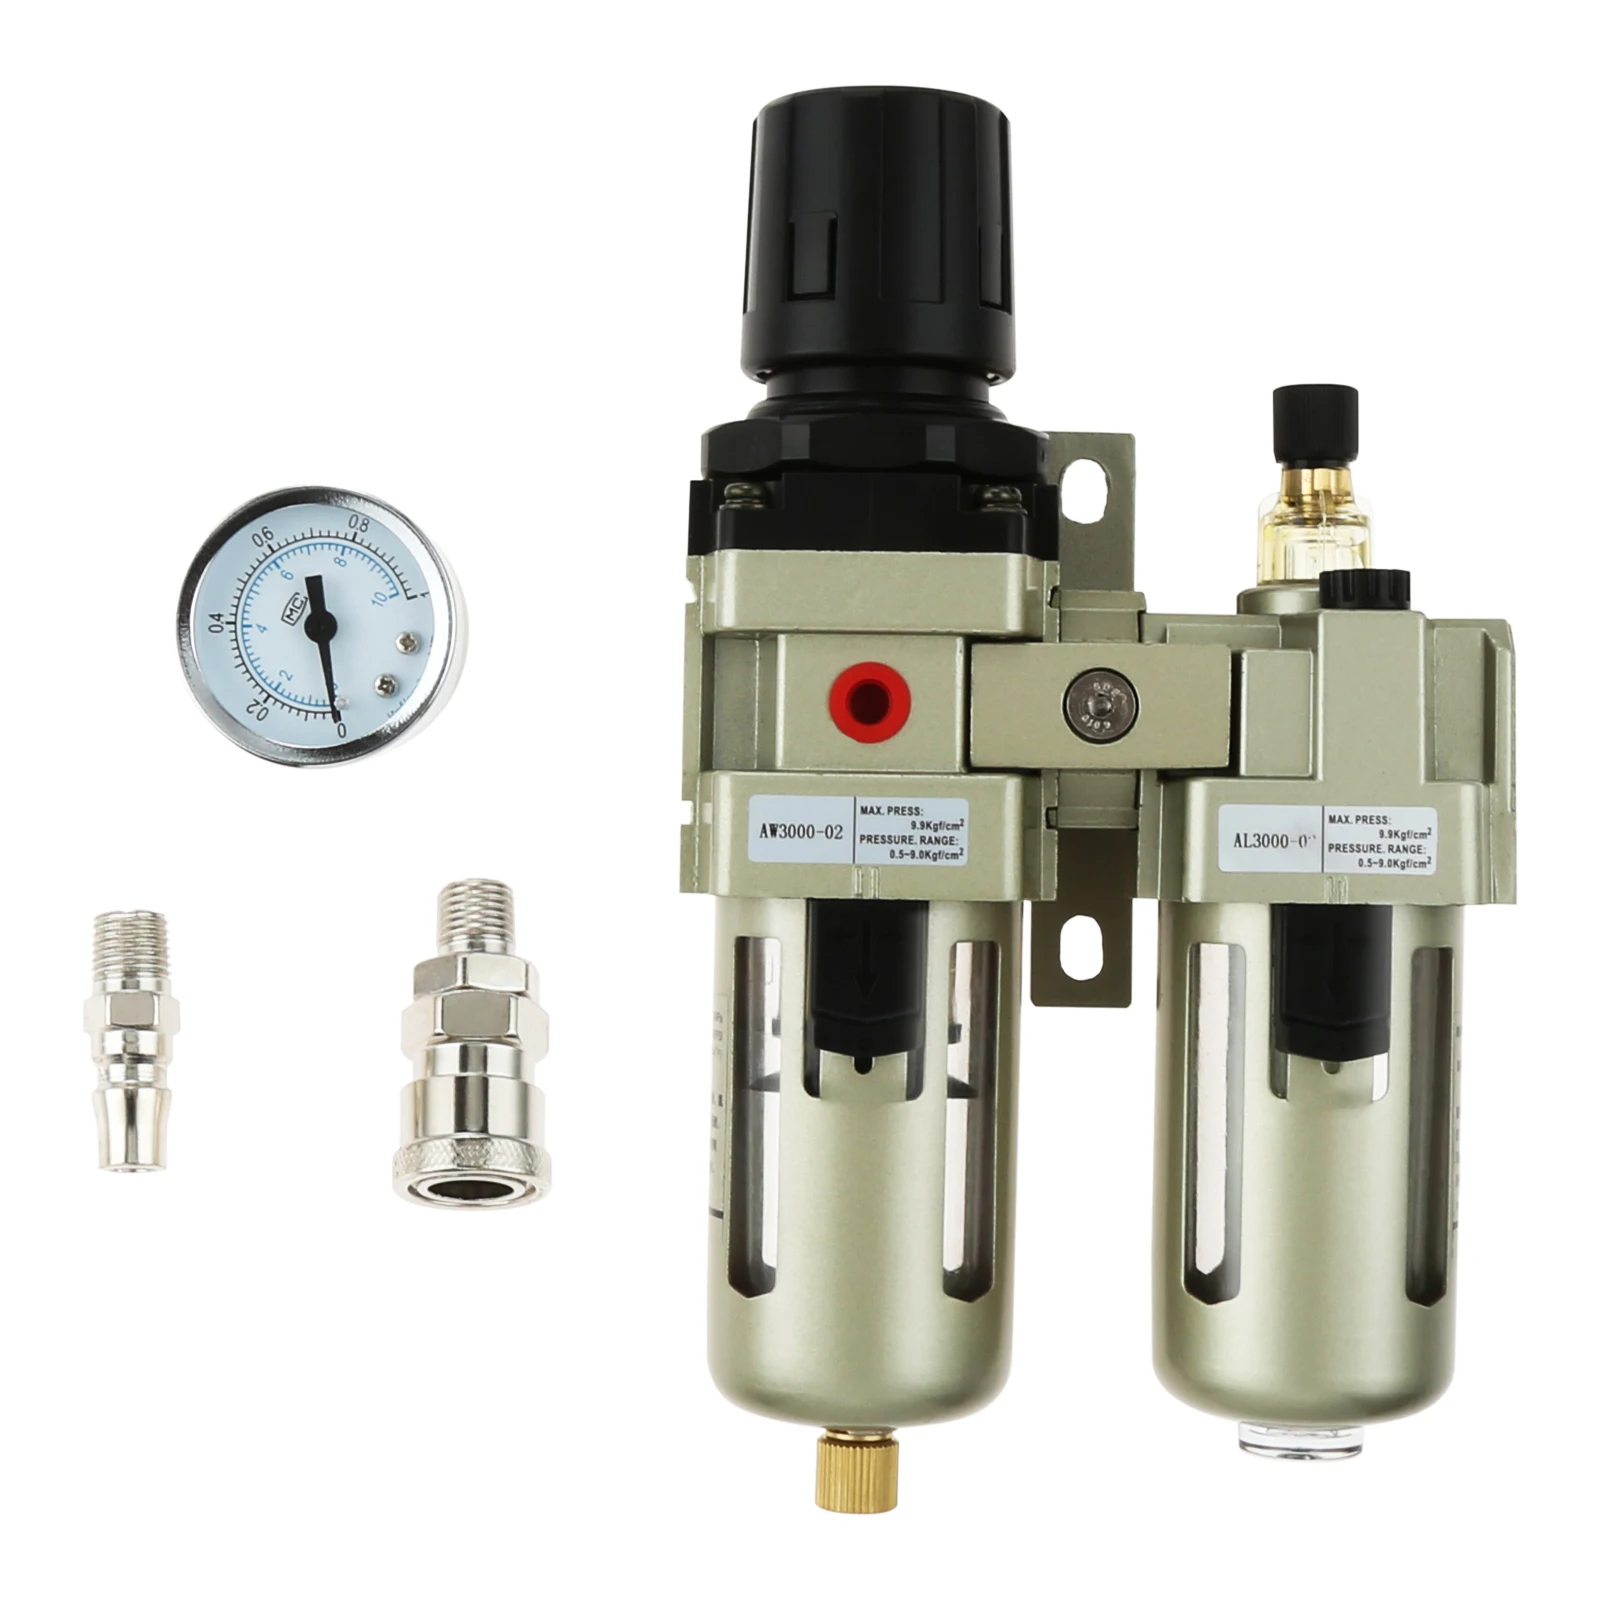 AC3010-02 Oil Water Filter Tools Kit for Electrician Air Compressor Regulating Pressure Regulator Pneumatic Filter